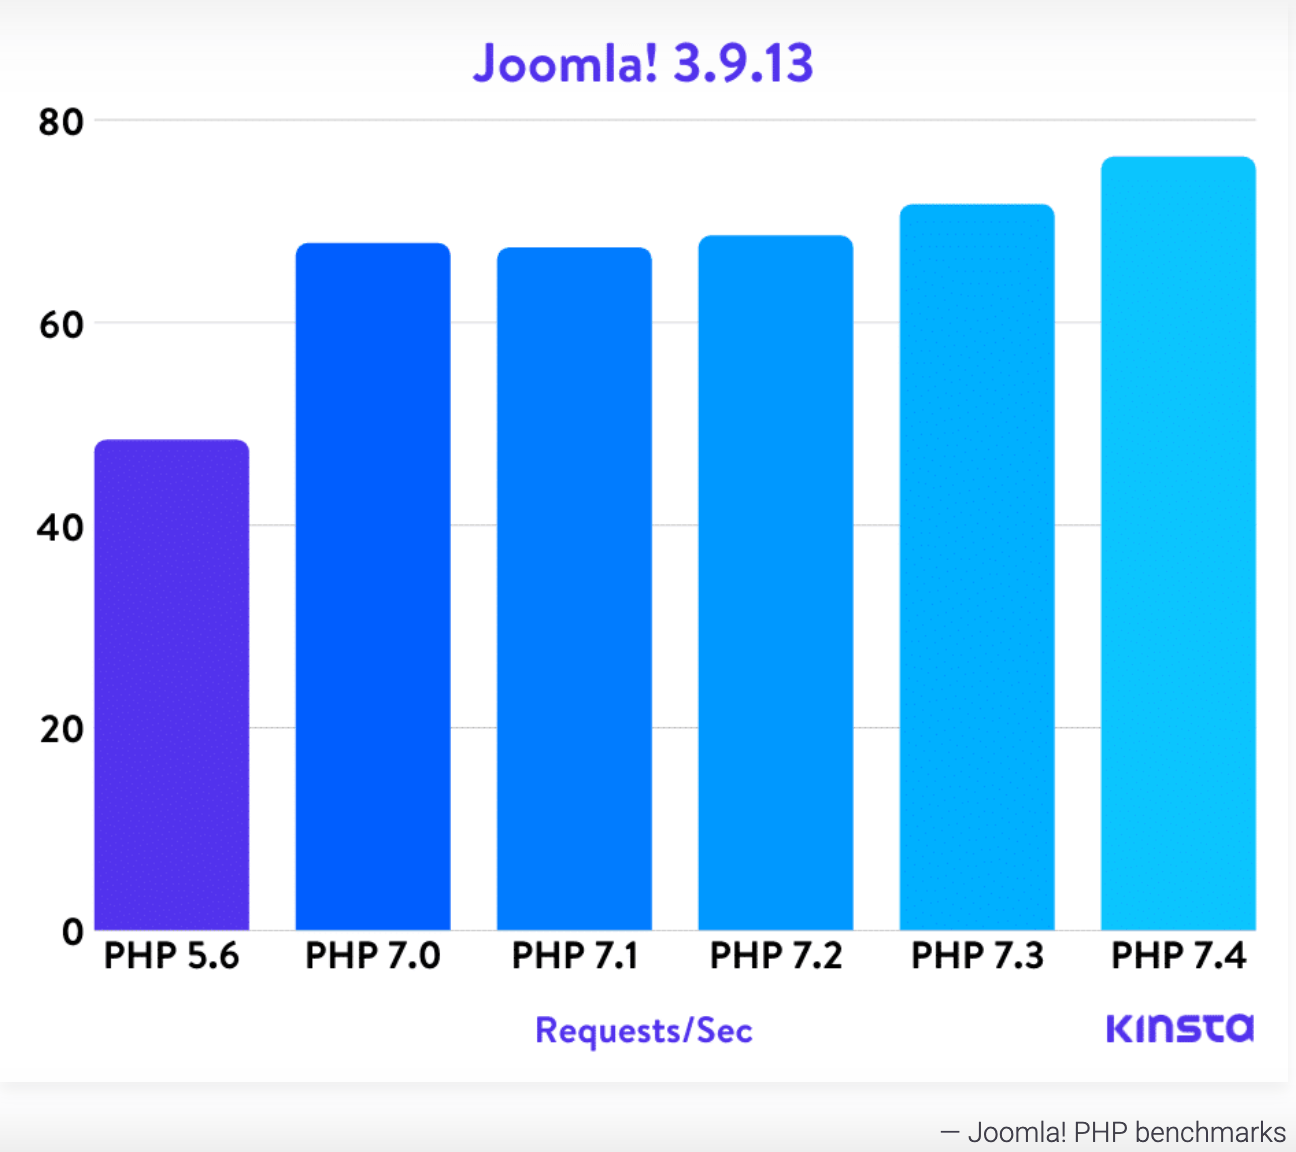 在Joomla中更新PHP的入门指南